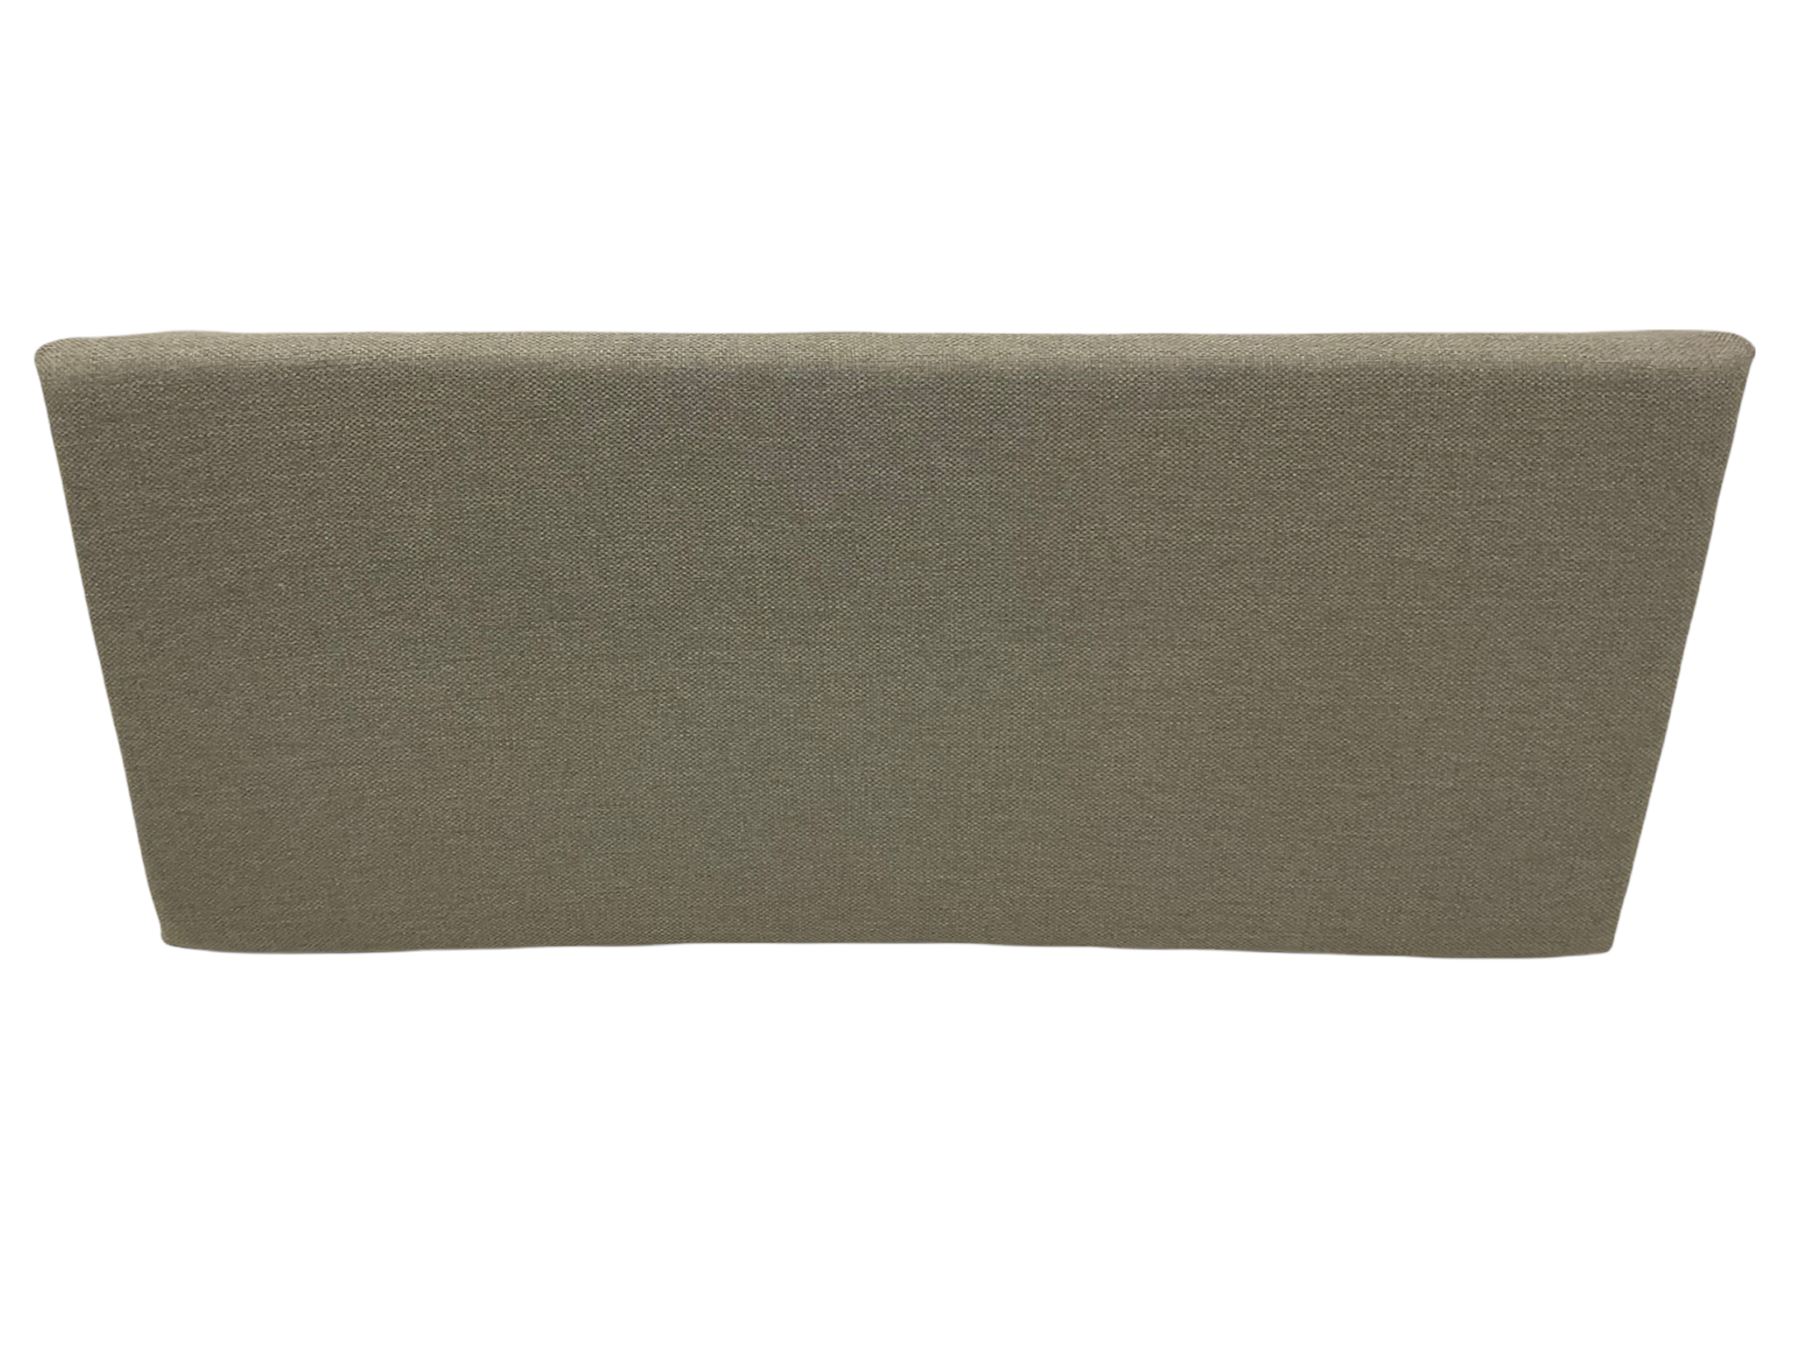 SuperKing 6' headboard upholstered in Warwick moon grey fabric - Image 2 of 5